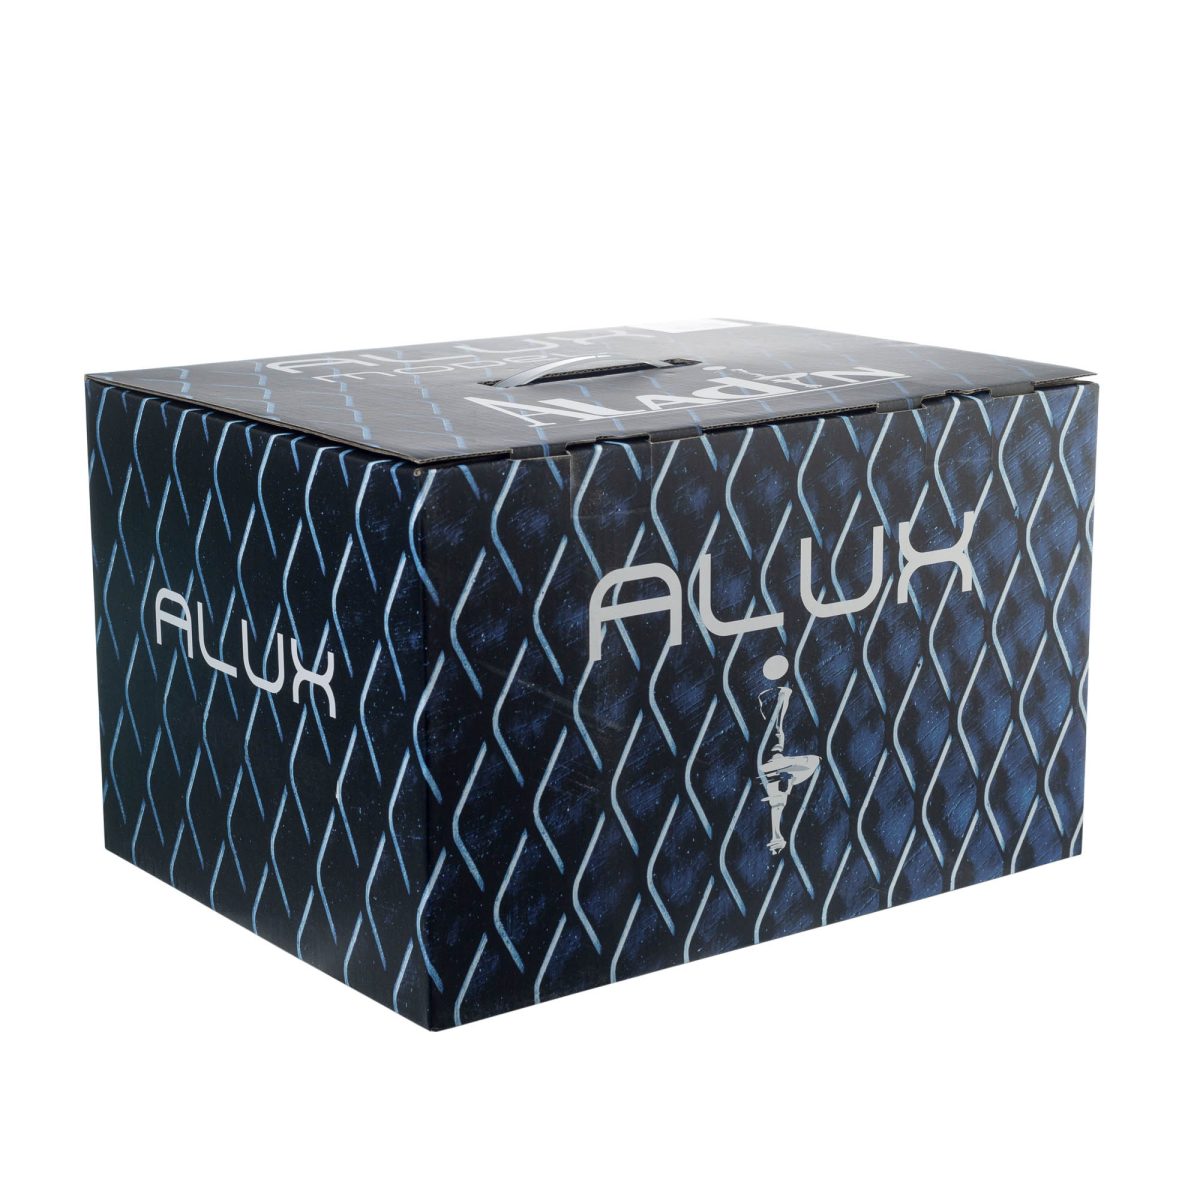 Aladin Alux box